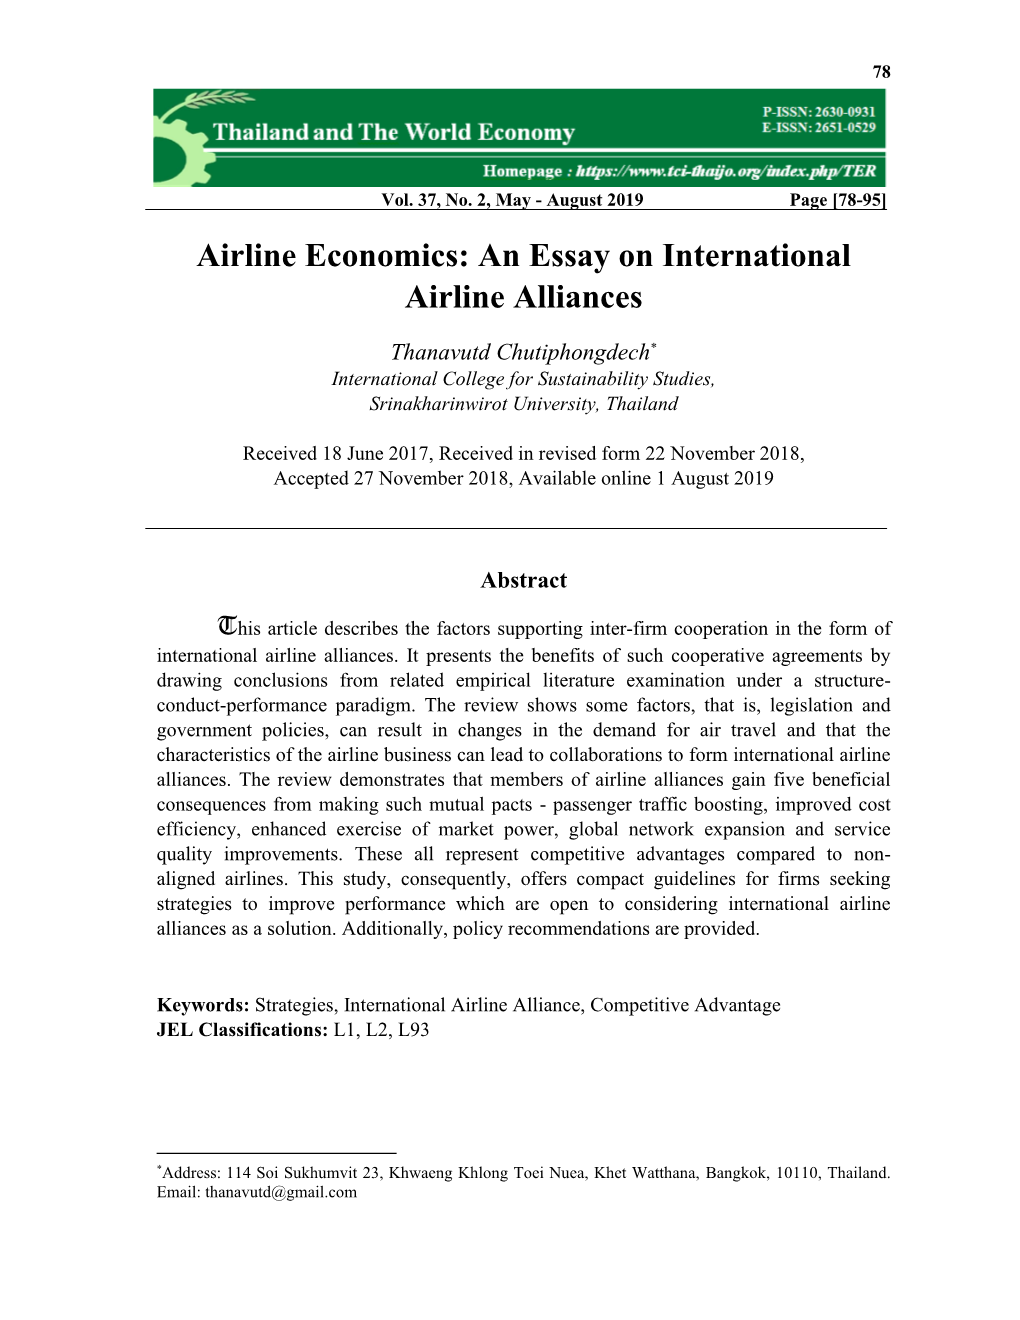 An Essay on International Airline Alliances